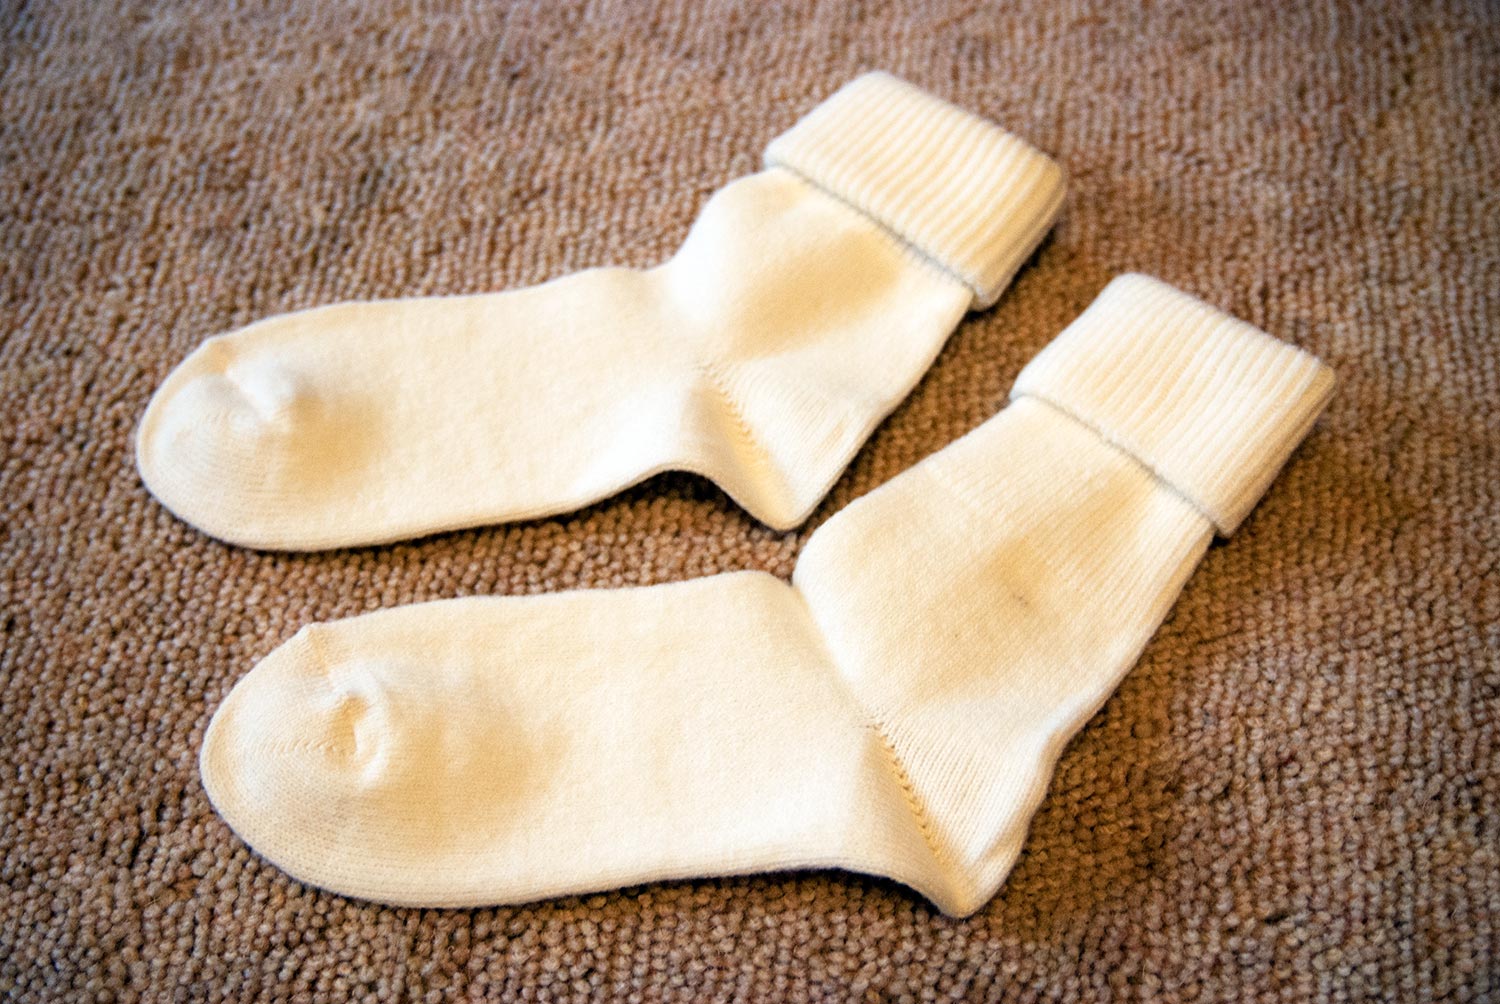 Белые тёплые носочки. Фото: bracatuS.com